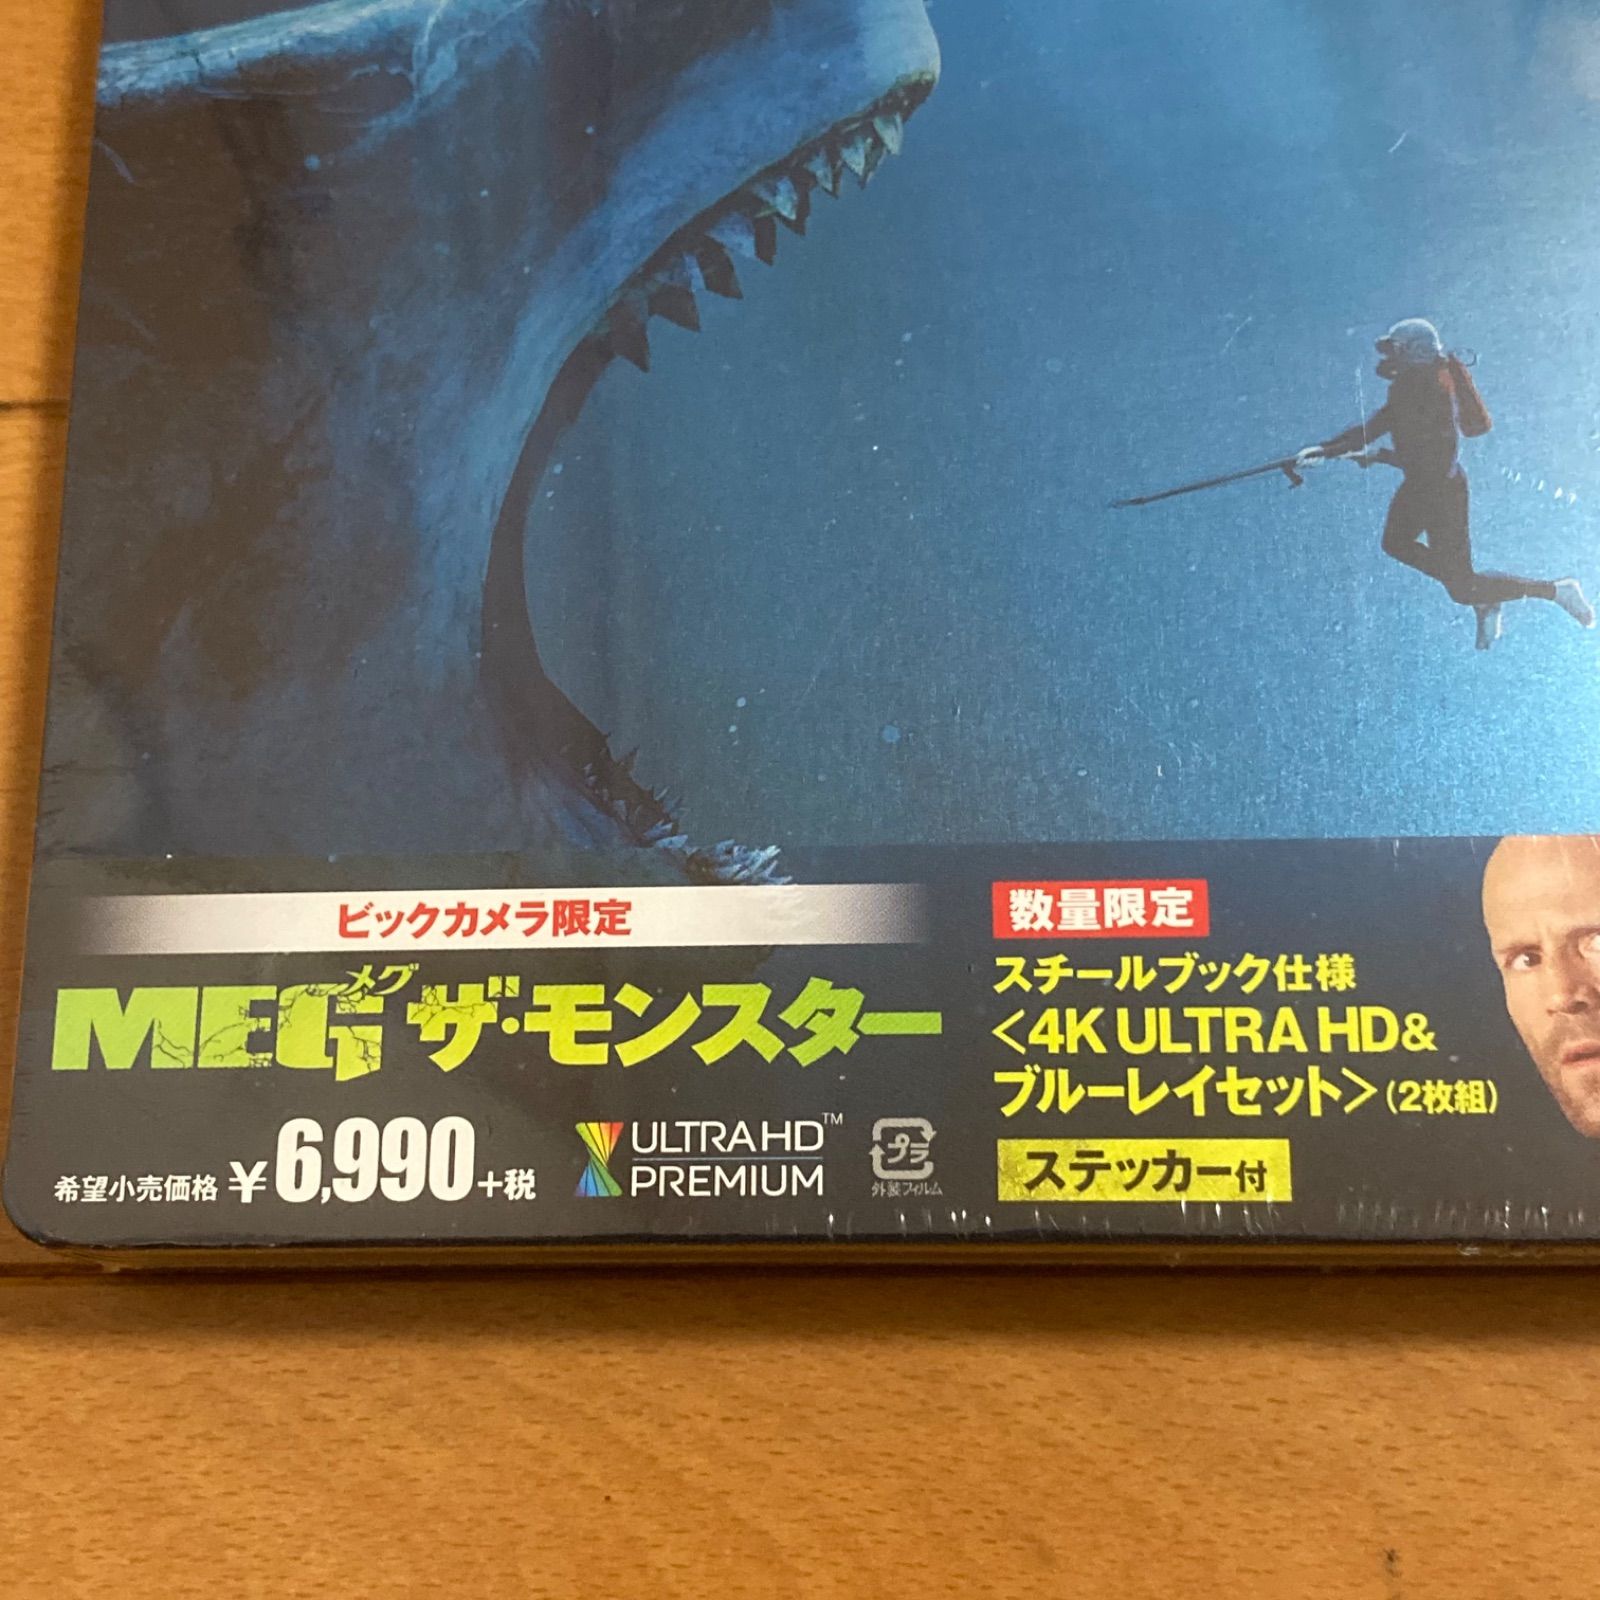 MEG ザ・モンスター 数量限定スチールブック 【Blu-ray】 - メルカリ